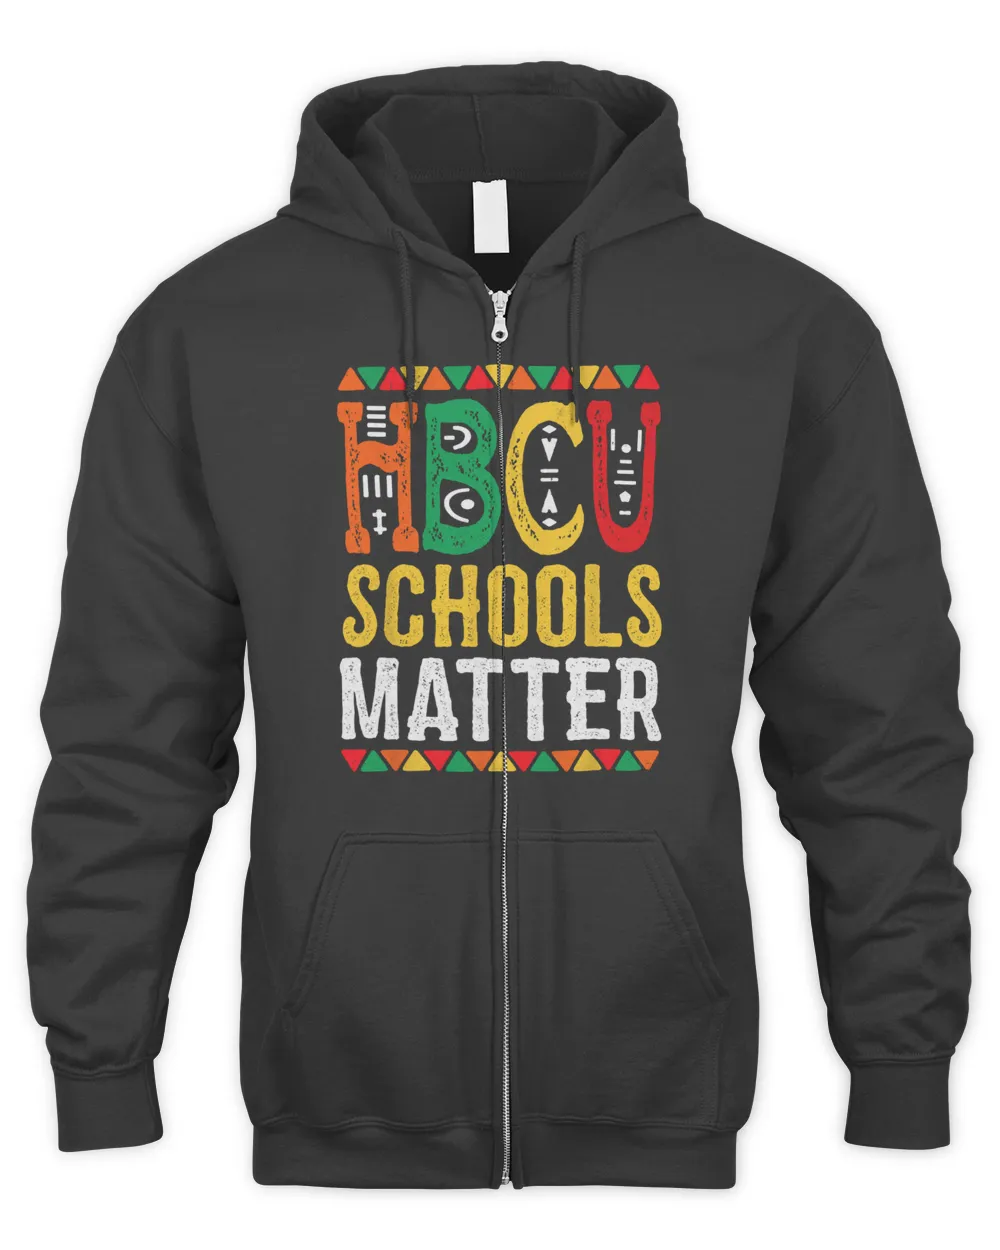 Proud HBCU Schools Matter Historical Black College Alumni